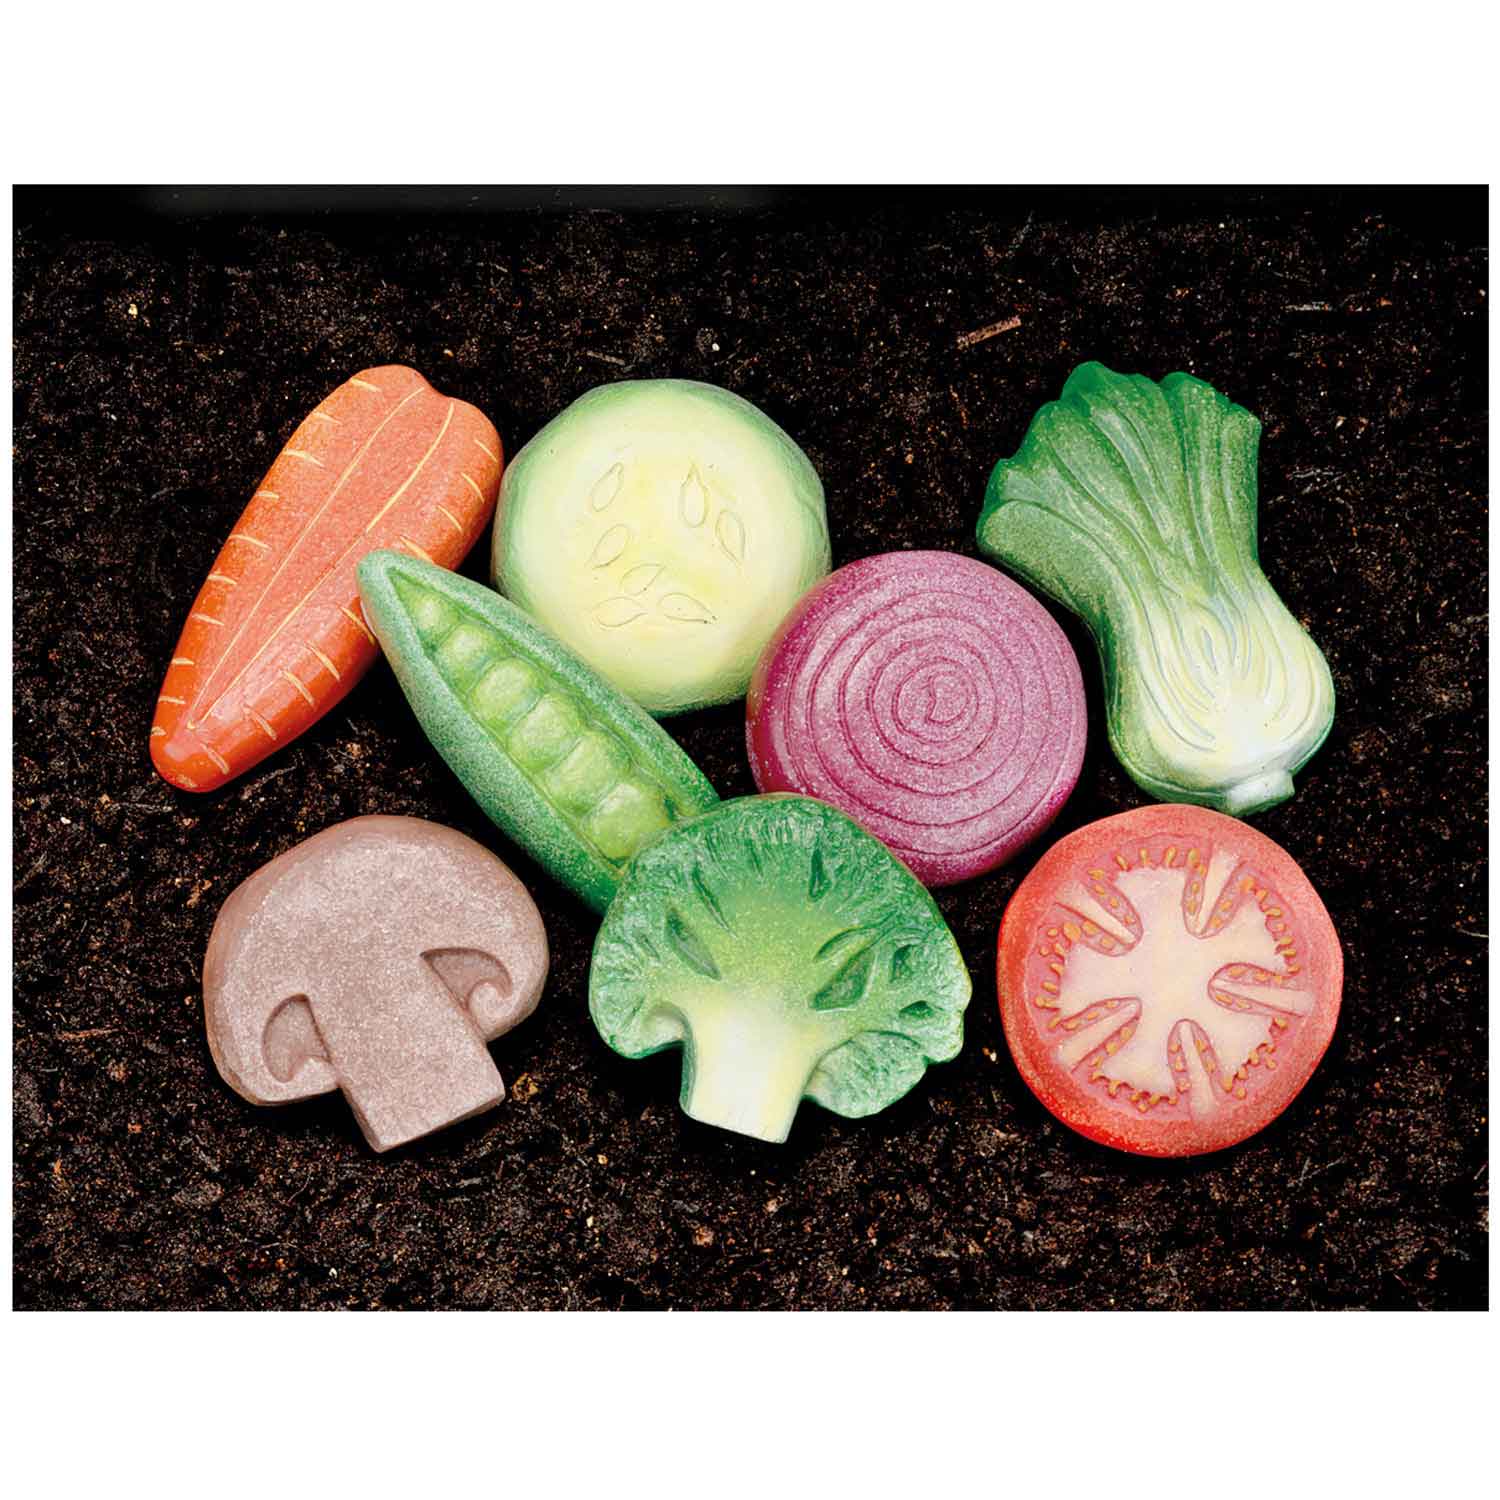 Sensory Play Stones, Vegetables